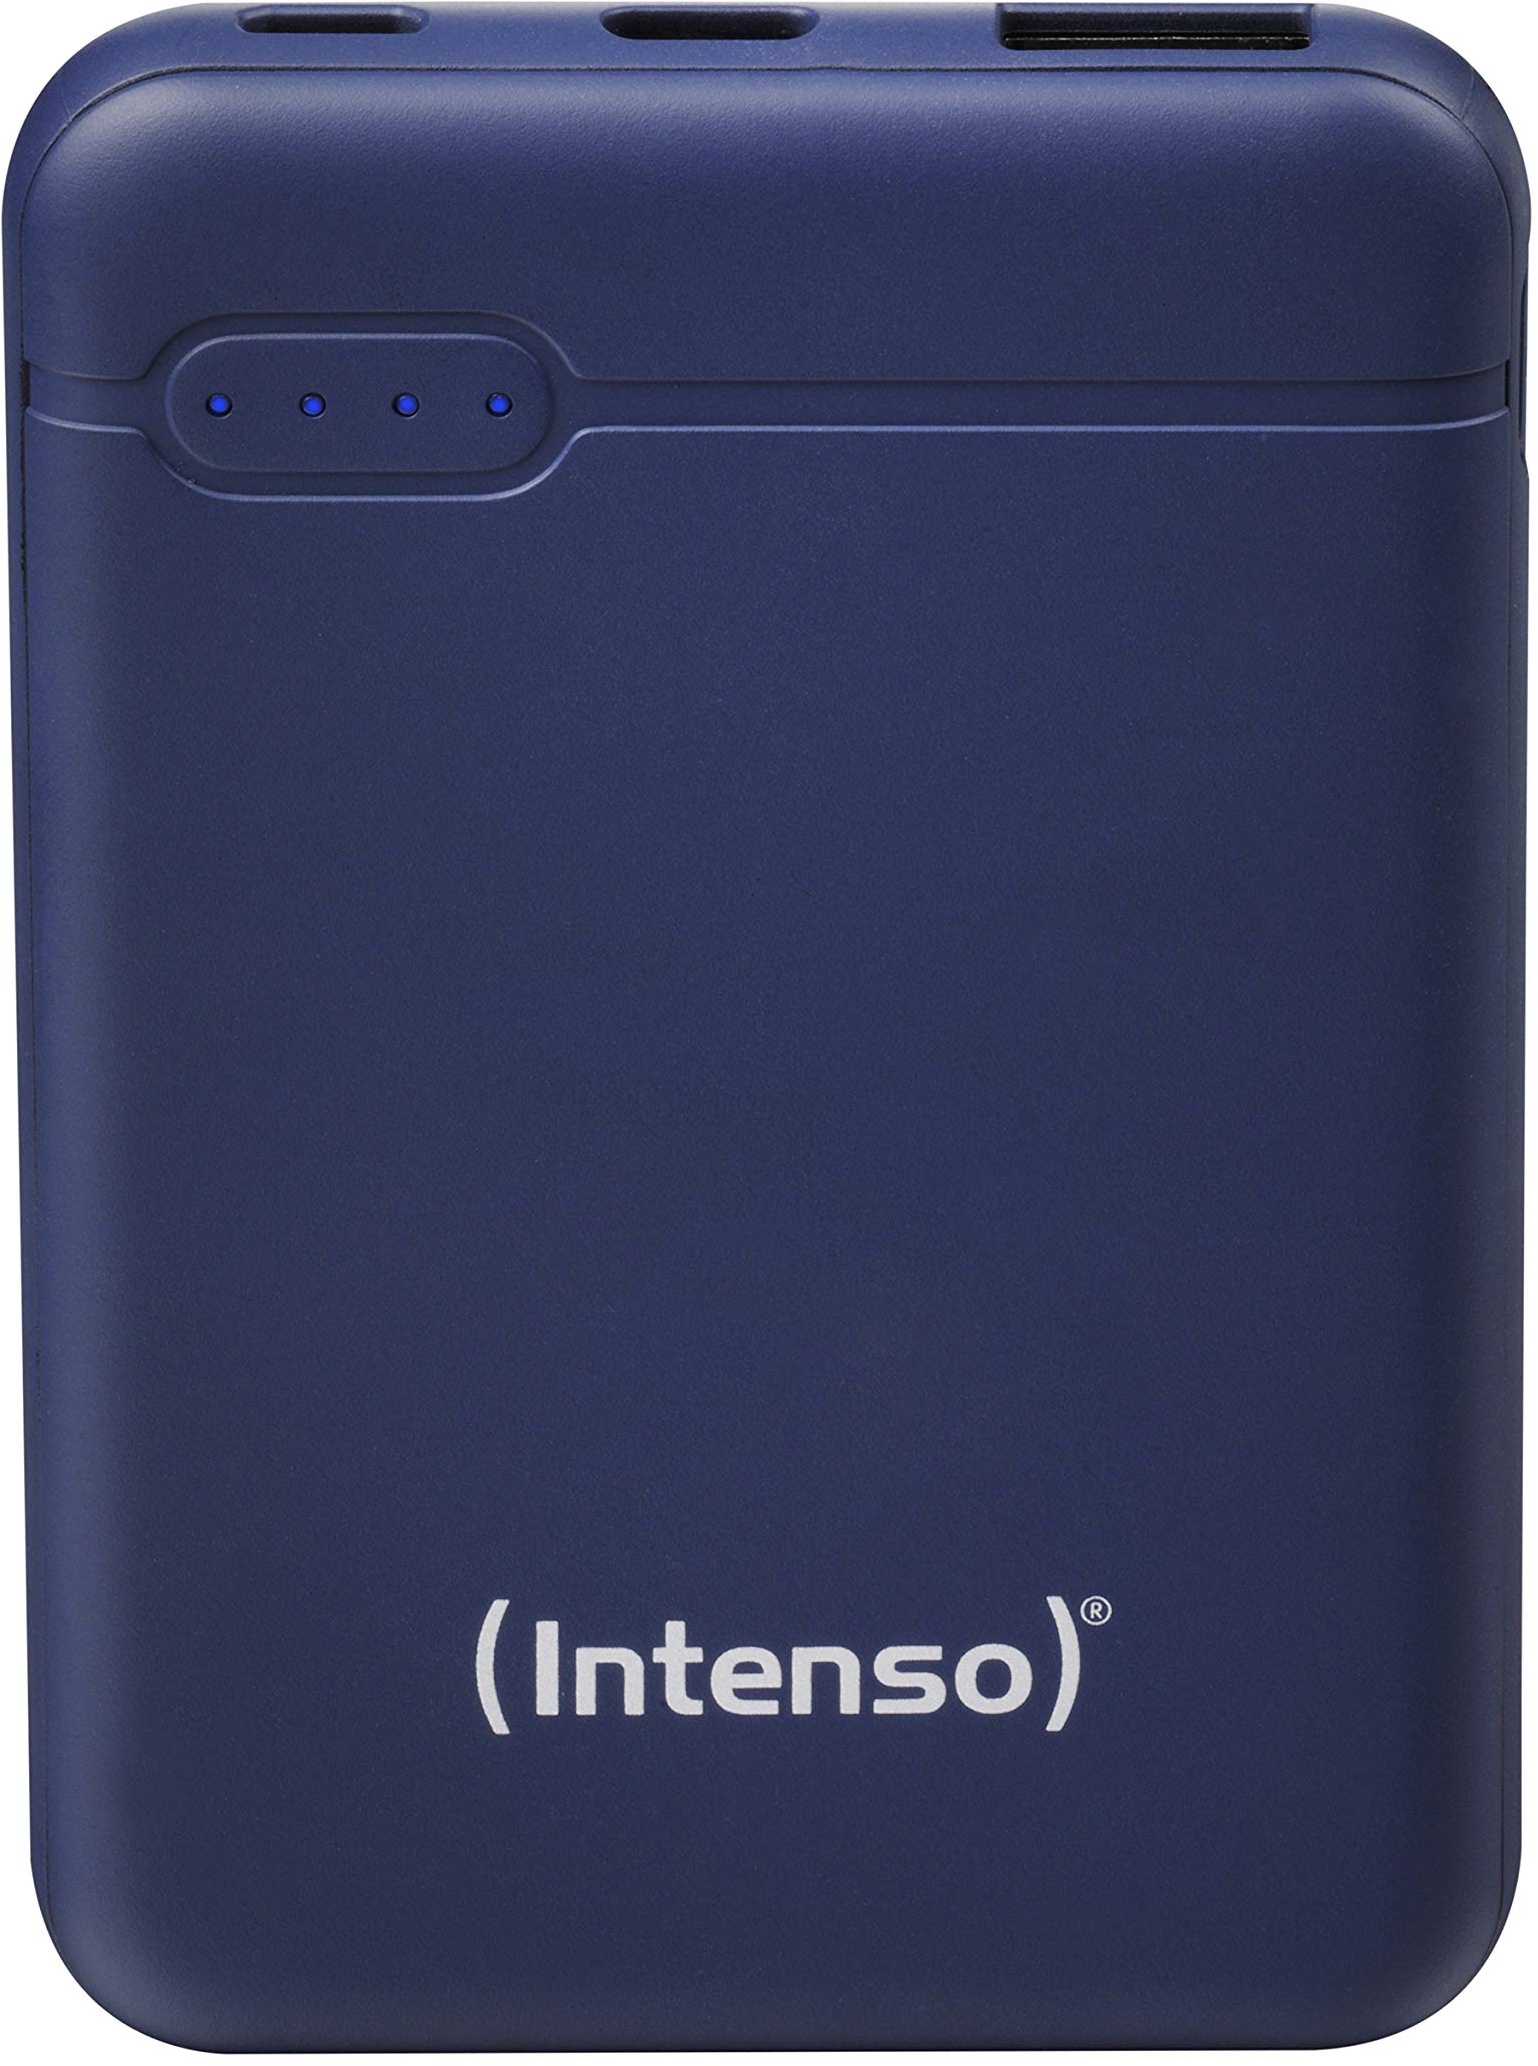 Intenso 7313525 Powerbank XS 5000, externes Ladegerät (5000mAh, geeignet für Smartphone/Tablet PC/MP3 Player/Digitalkamera) Blau